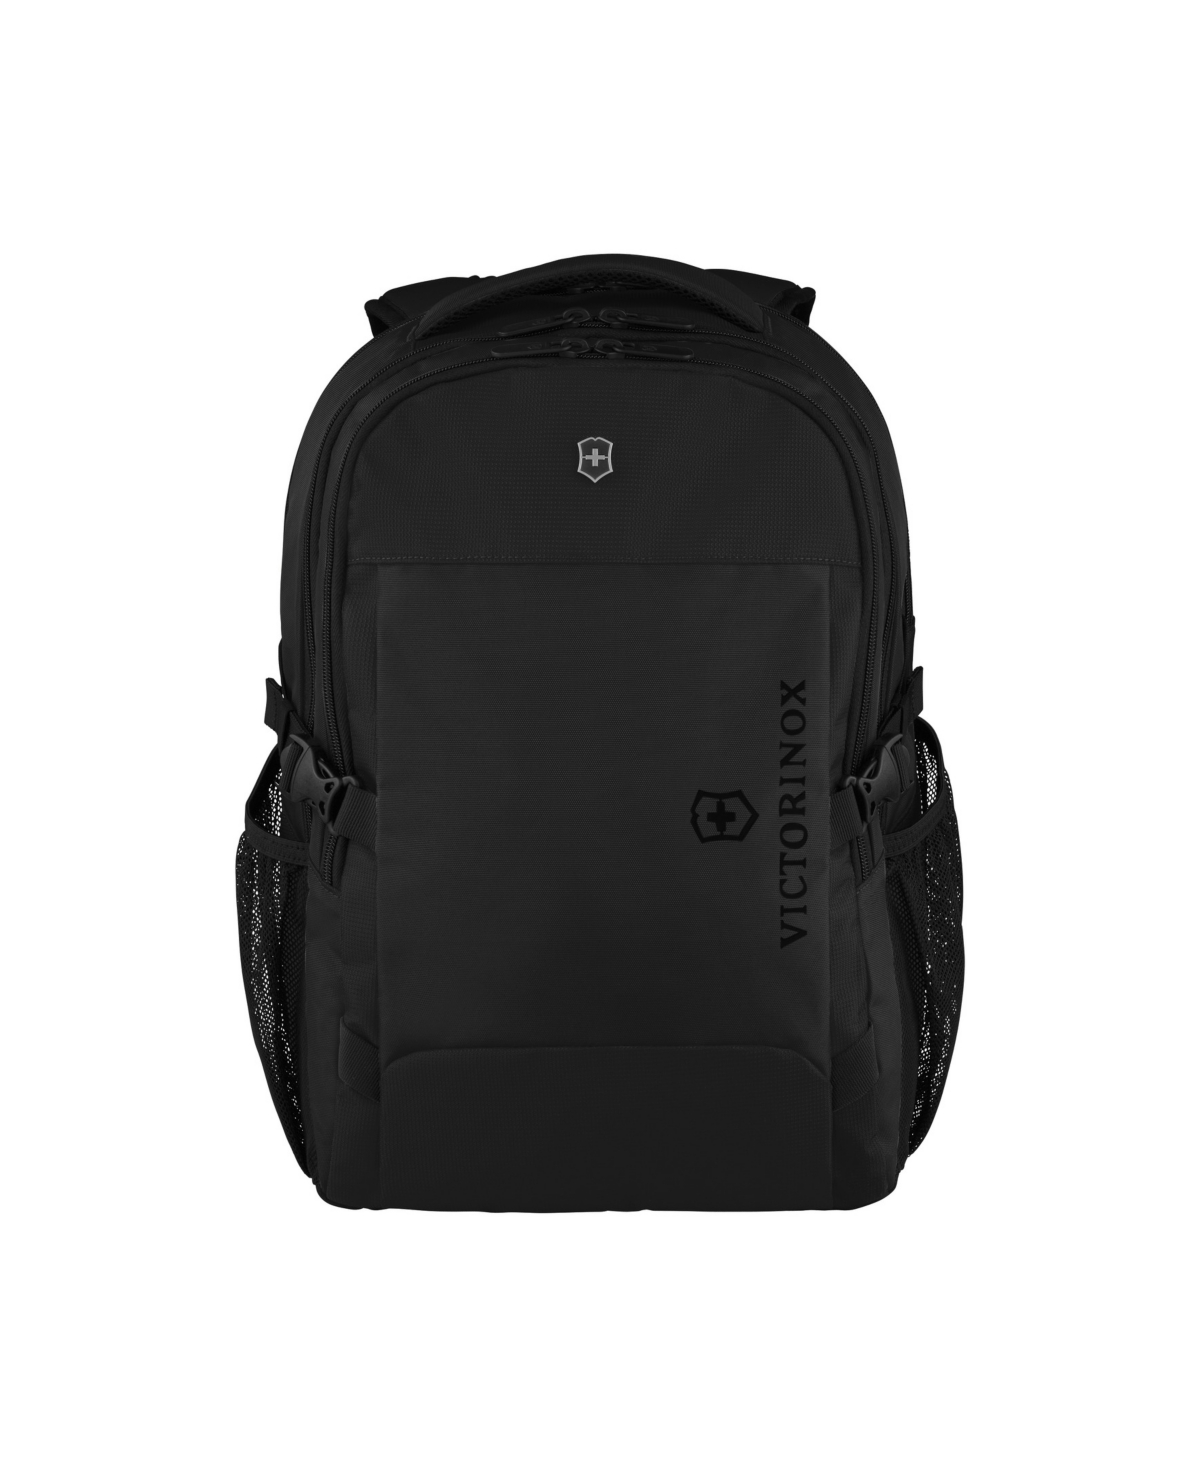 Vx Sport Evo Daypack Laptop Backpack - Black